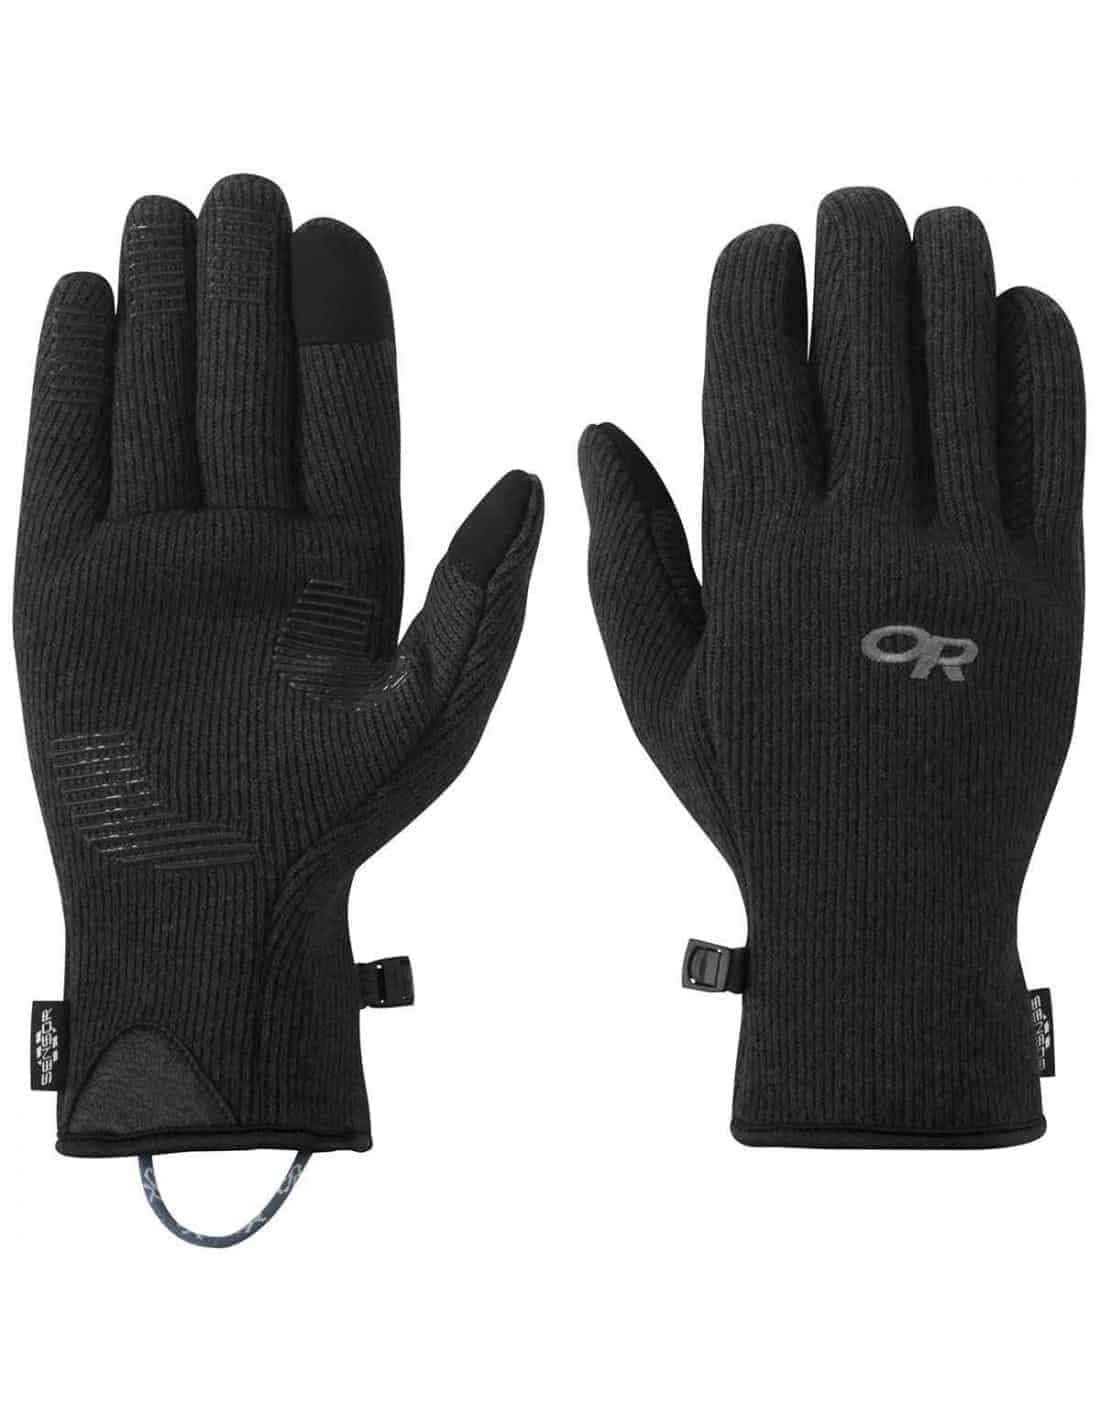 V-Street E-Vernal - Des gants chauffants qui aiment l'hiver.